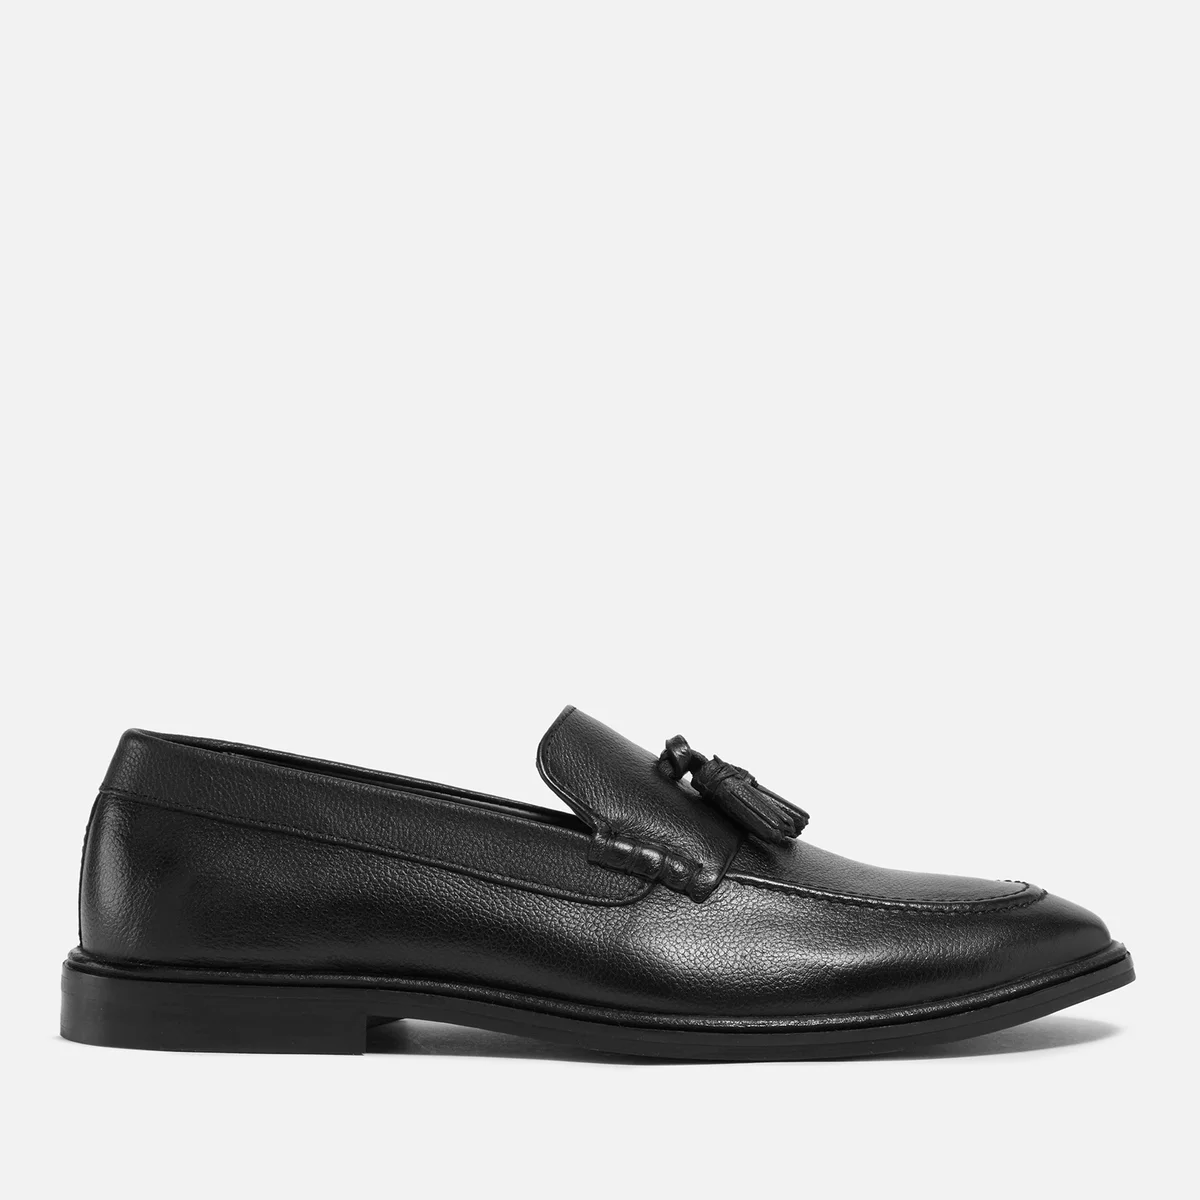 Walk London Men's West Leather Loafers - Black Image 1